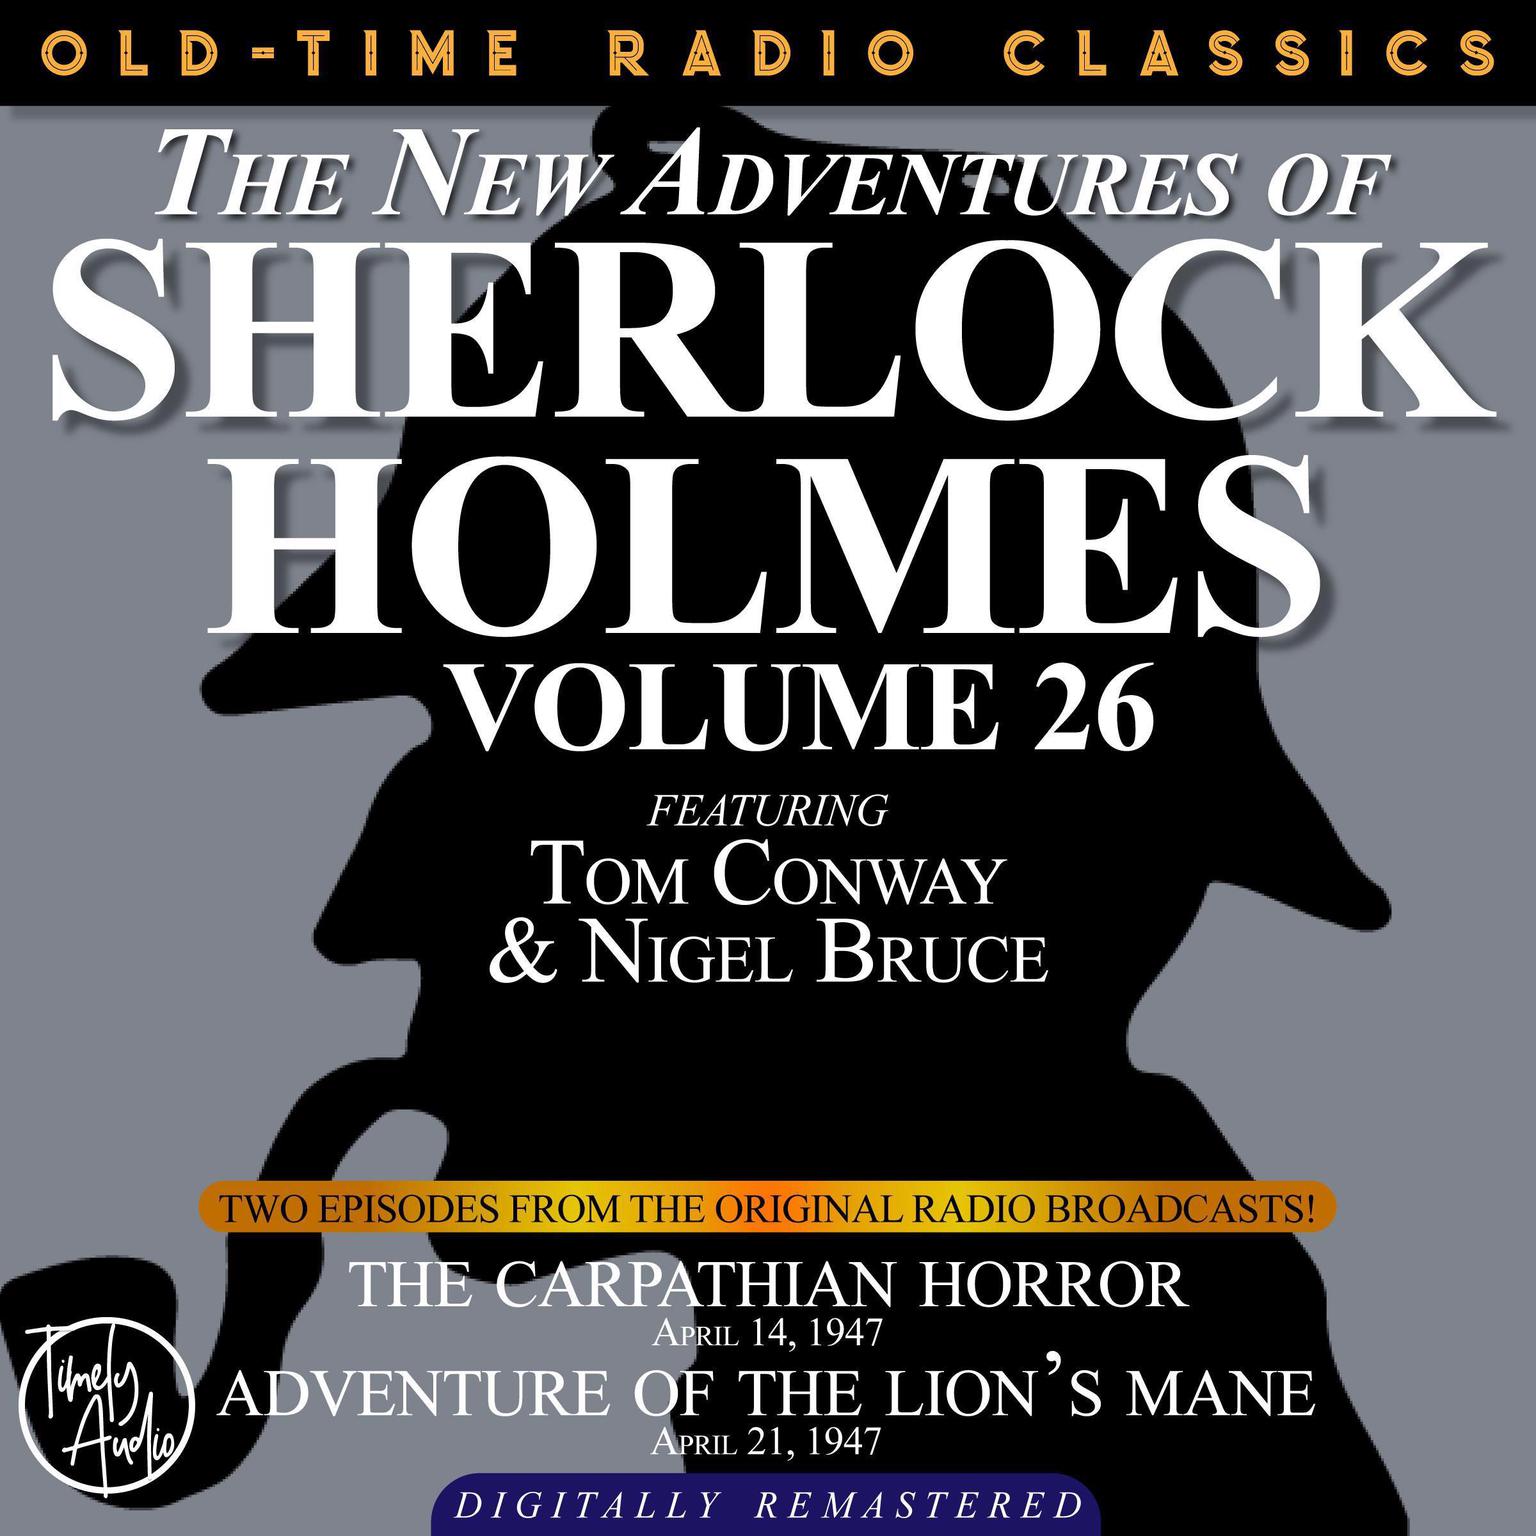 The Carpathian Horror and Adventure of the Lion’s Mane Audiobook, by Arthur Conan Doyle